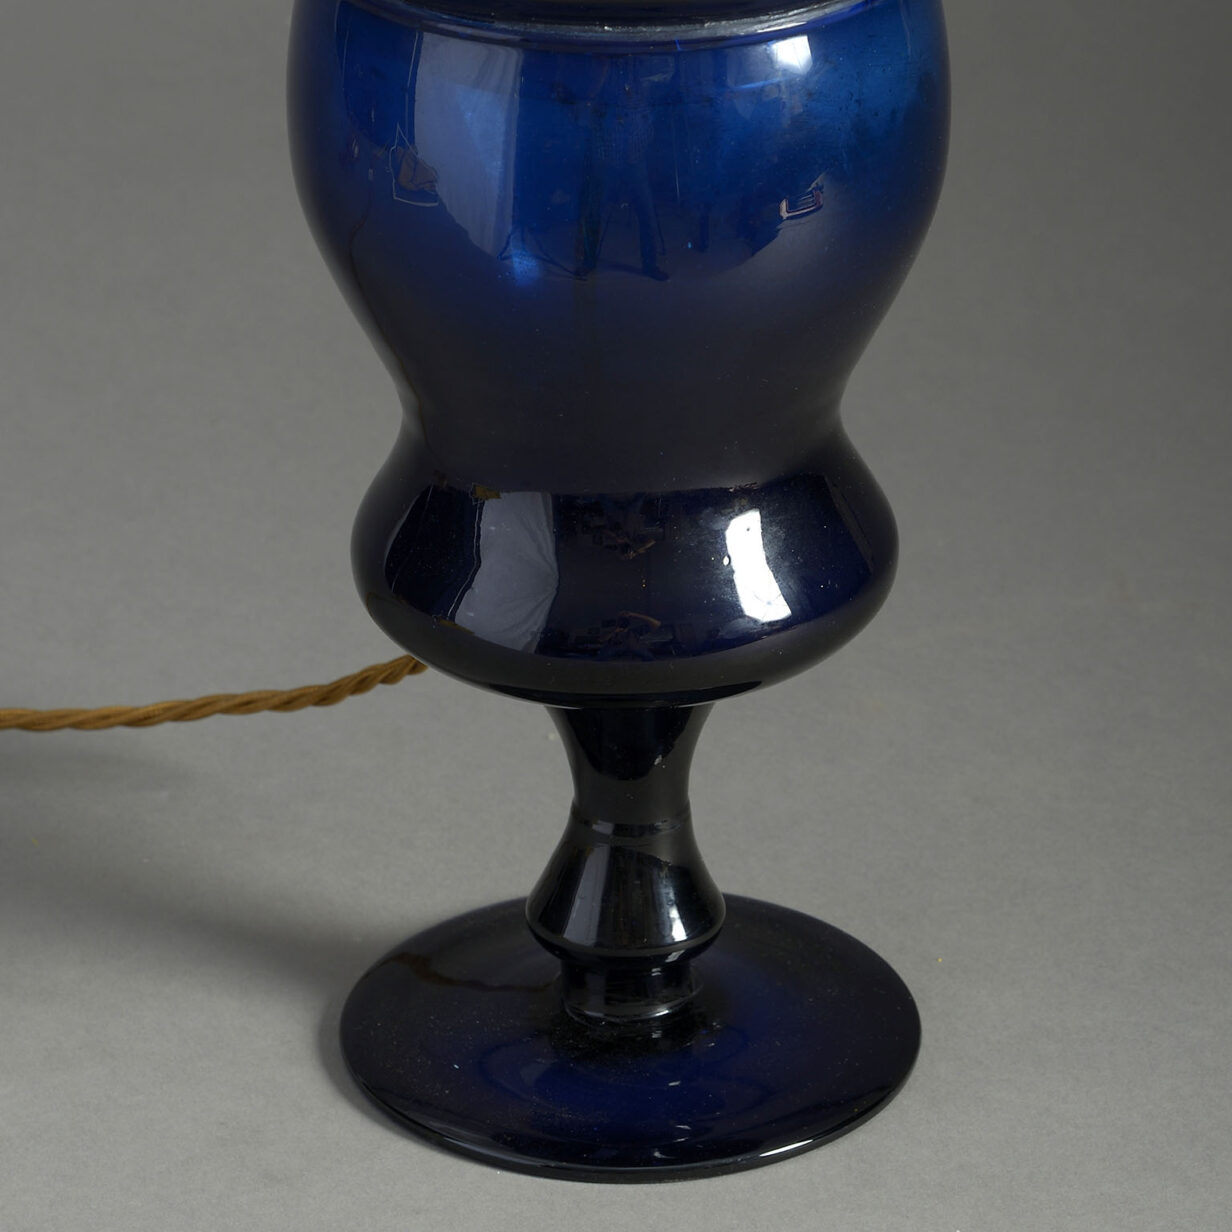 Bristol Blue Glass Lamp